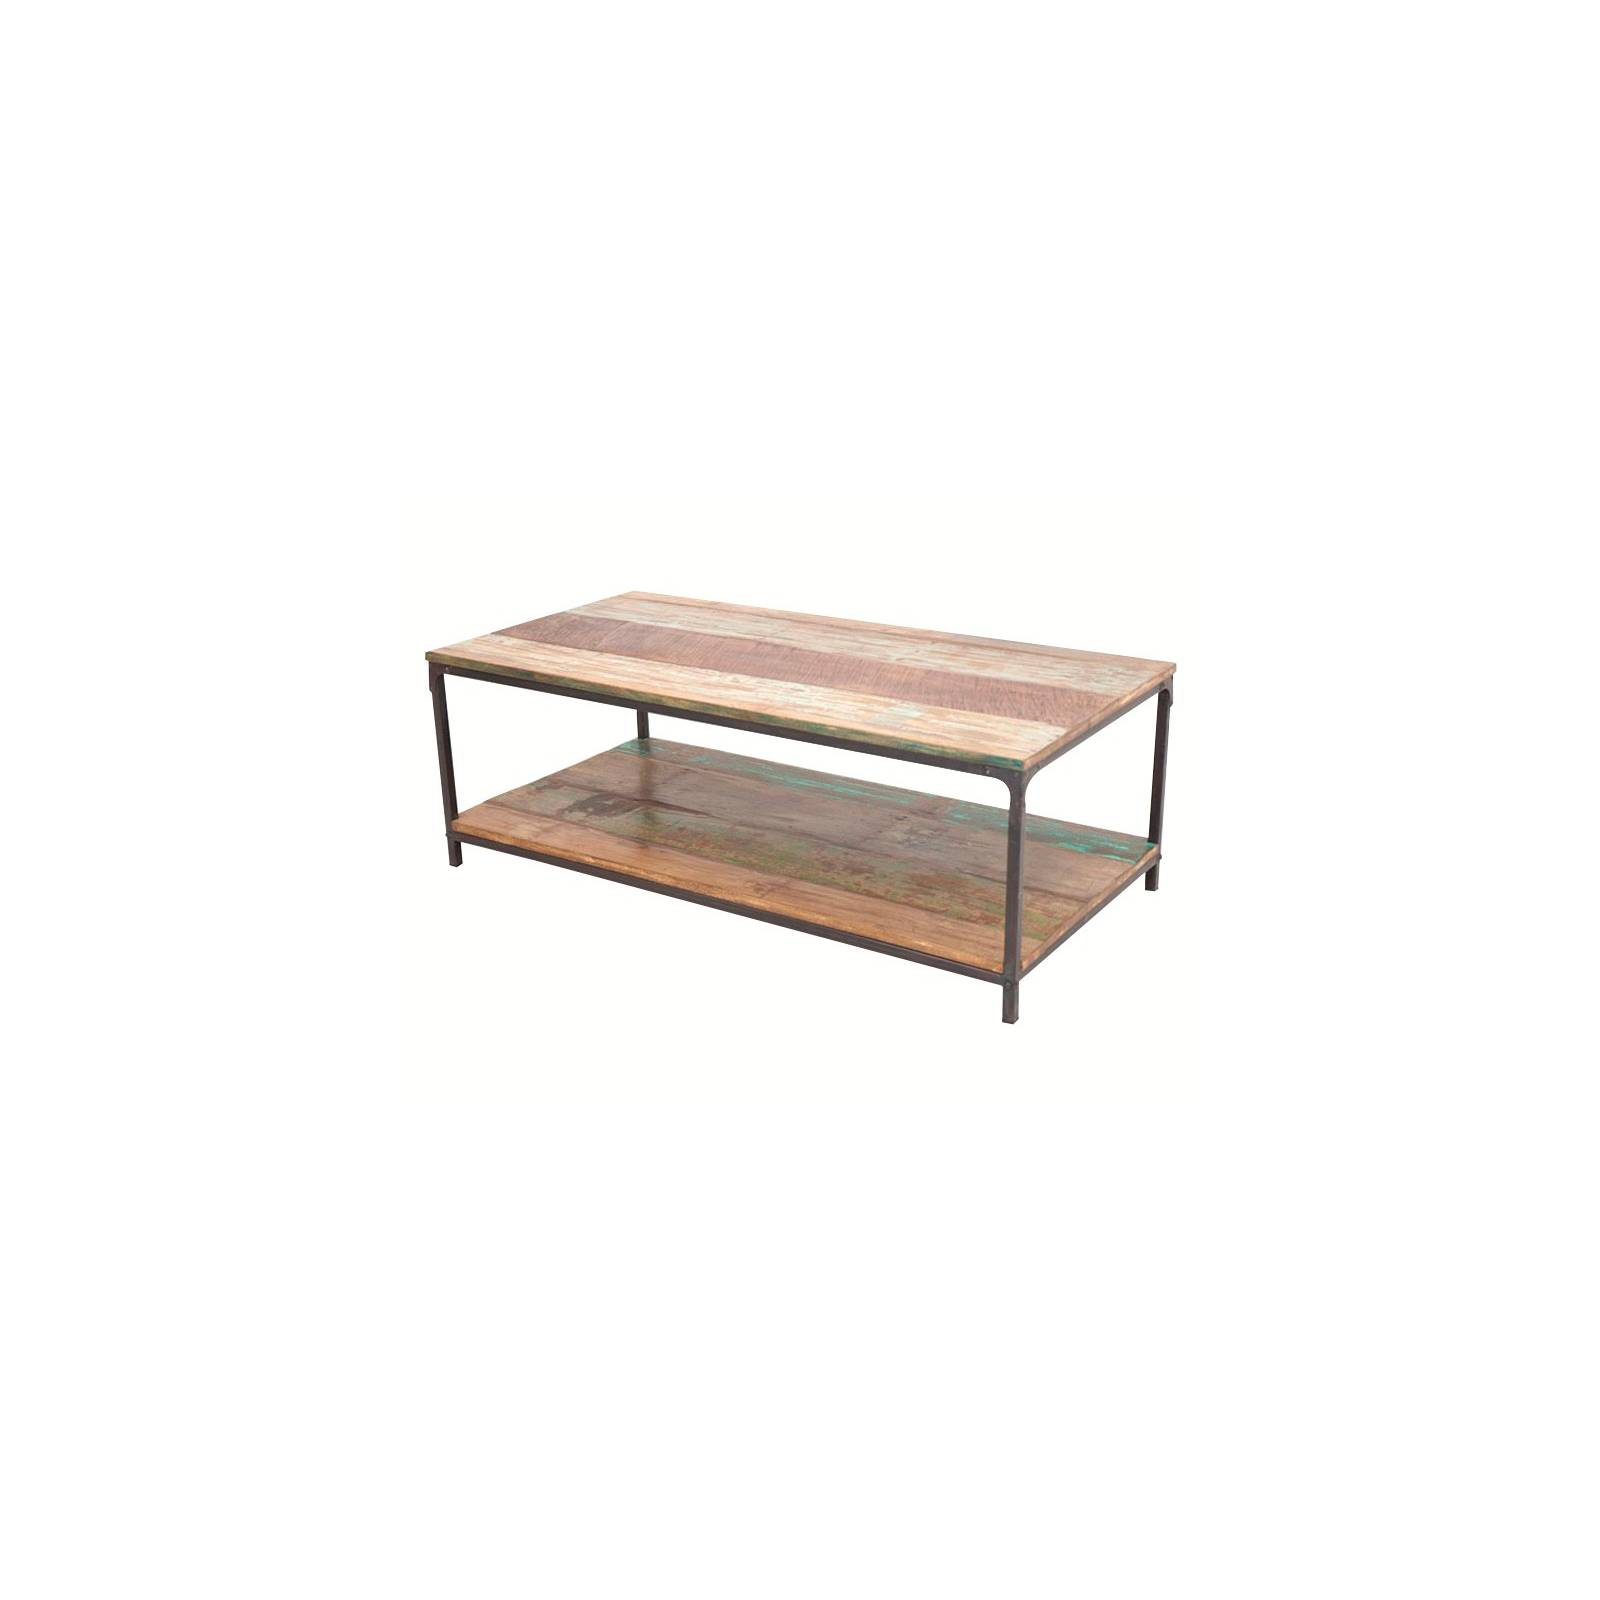 Table Basse Butterfly Palissandre - meuble industriel en bois exotique